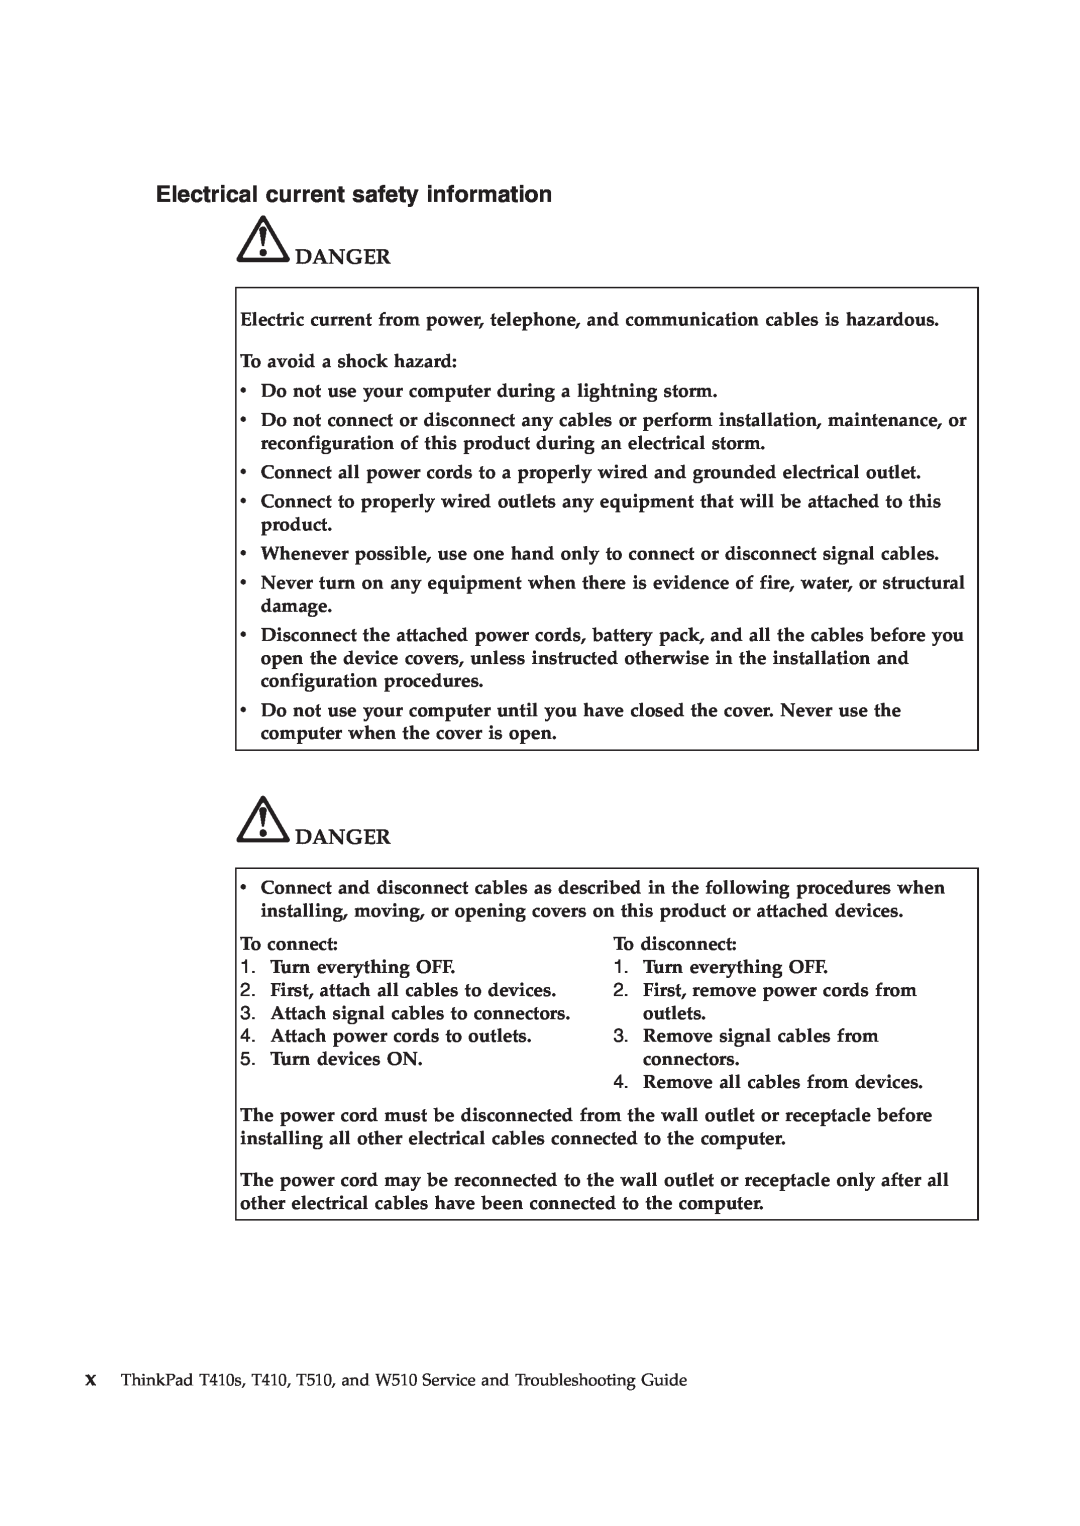 Lenovo T410S manual Electrical current safety information, Danger 